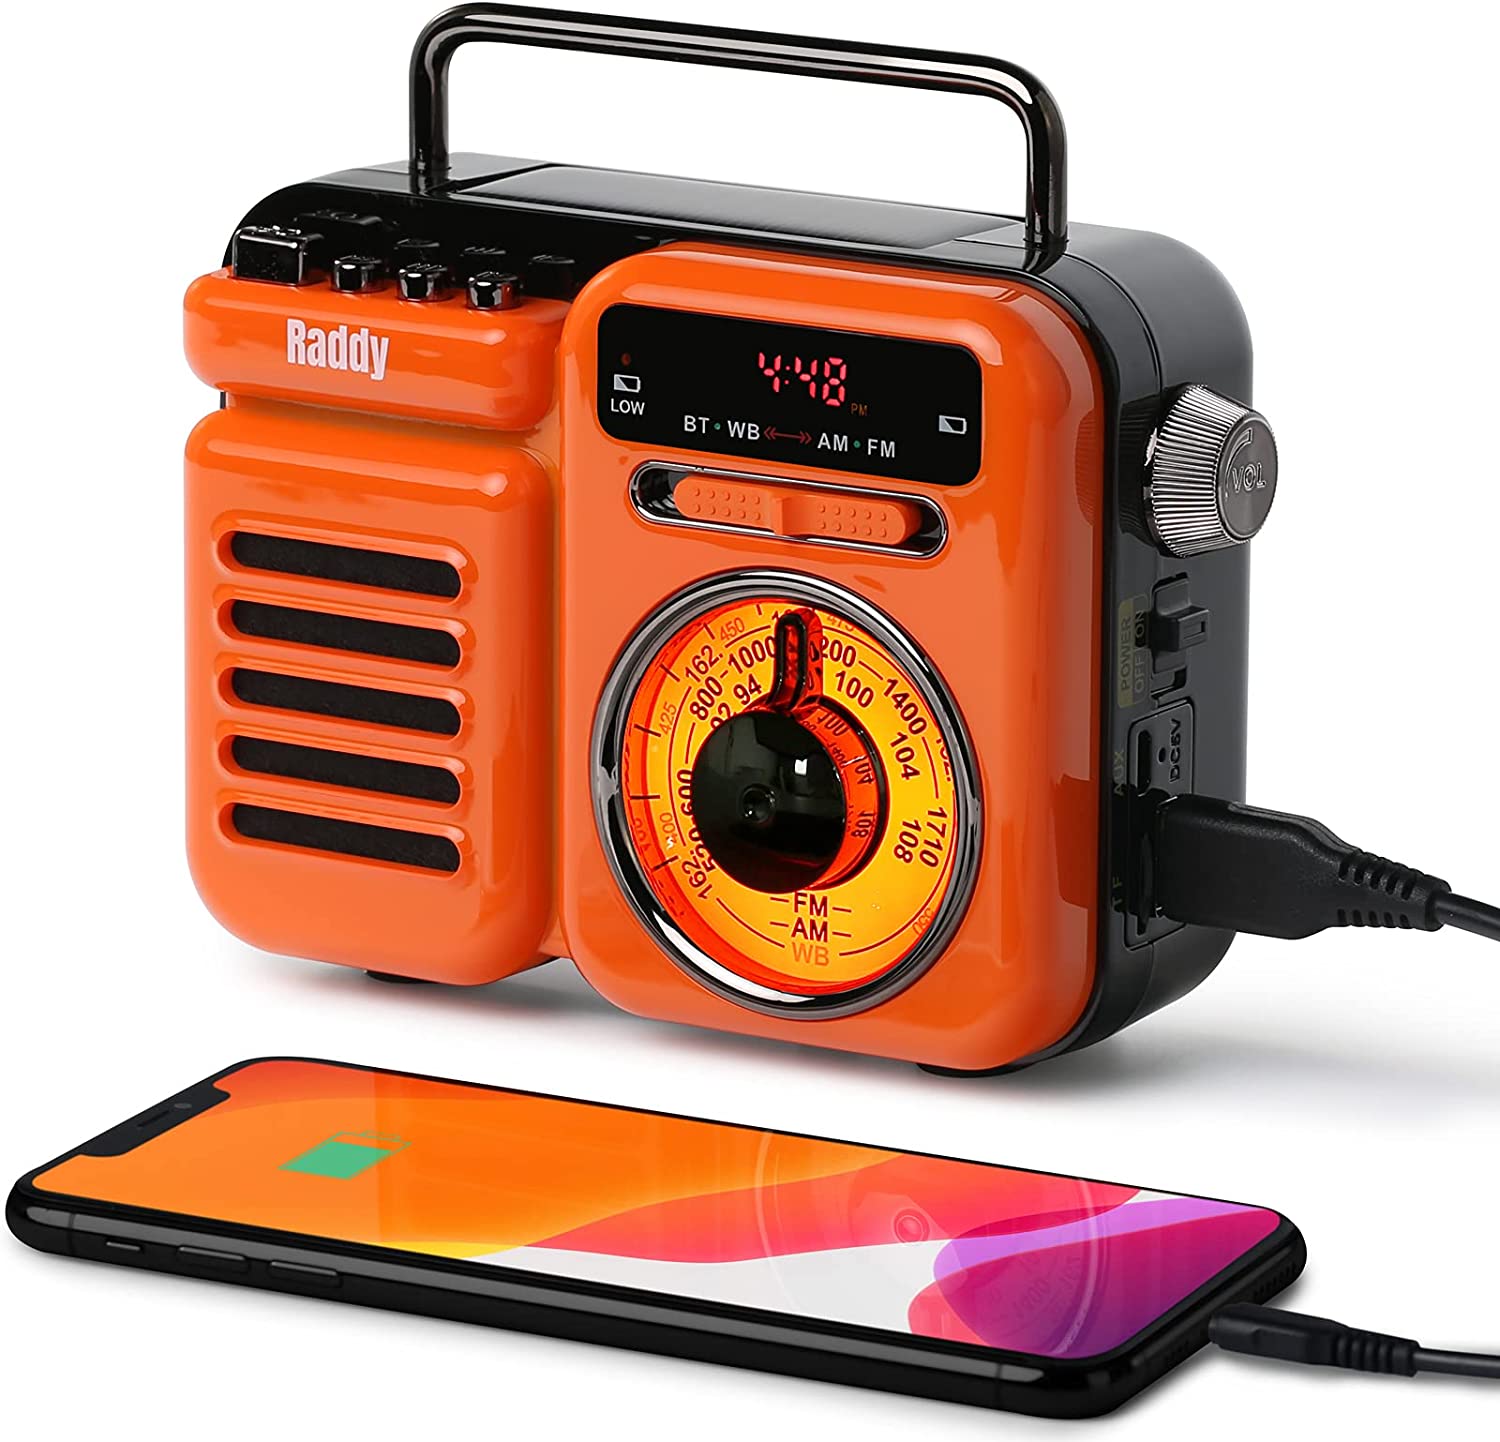 Raddy RW3 Emergency Hand Crank Radio Retro AM/FM/NOAA Radio, Solar Powered Battery Operated with Phone Charger